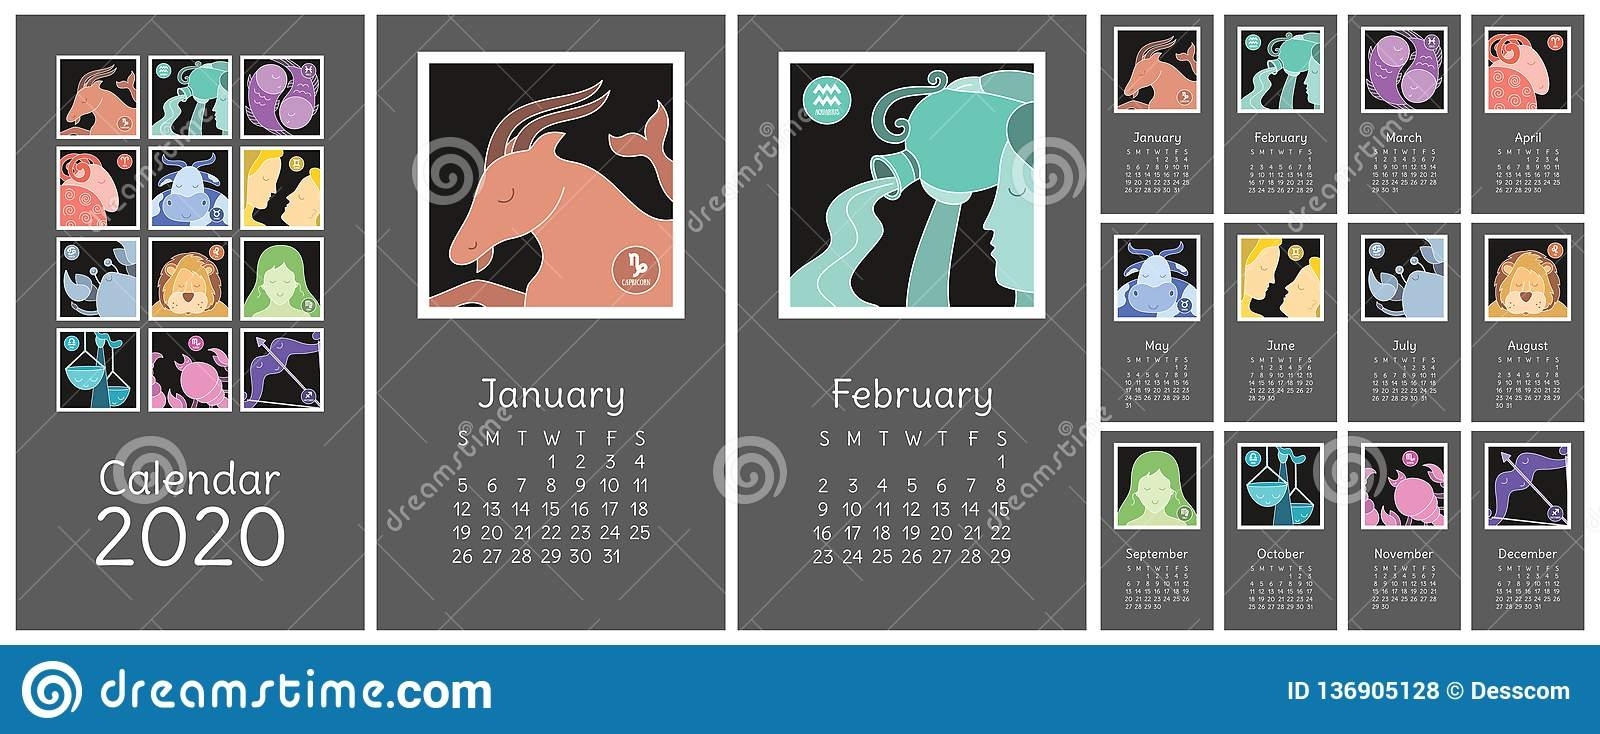 Calendar 2020. Zodiac Signs: Aquarius, Libra, Leo, Taurus